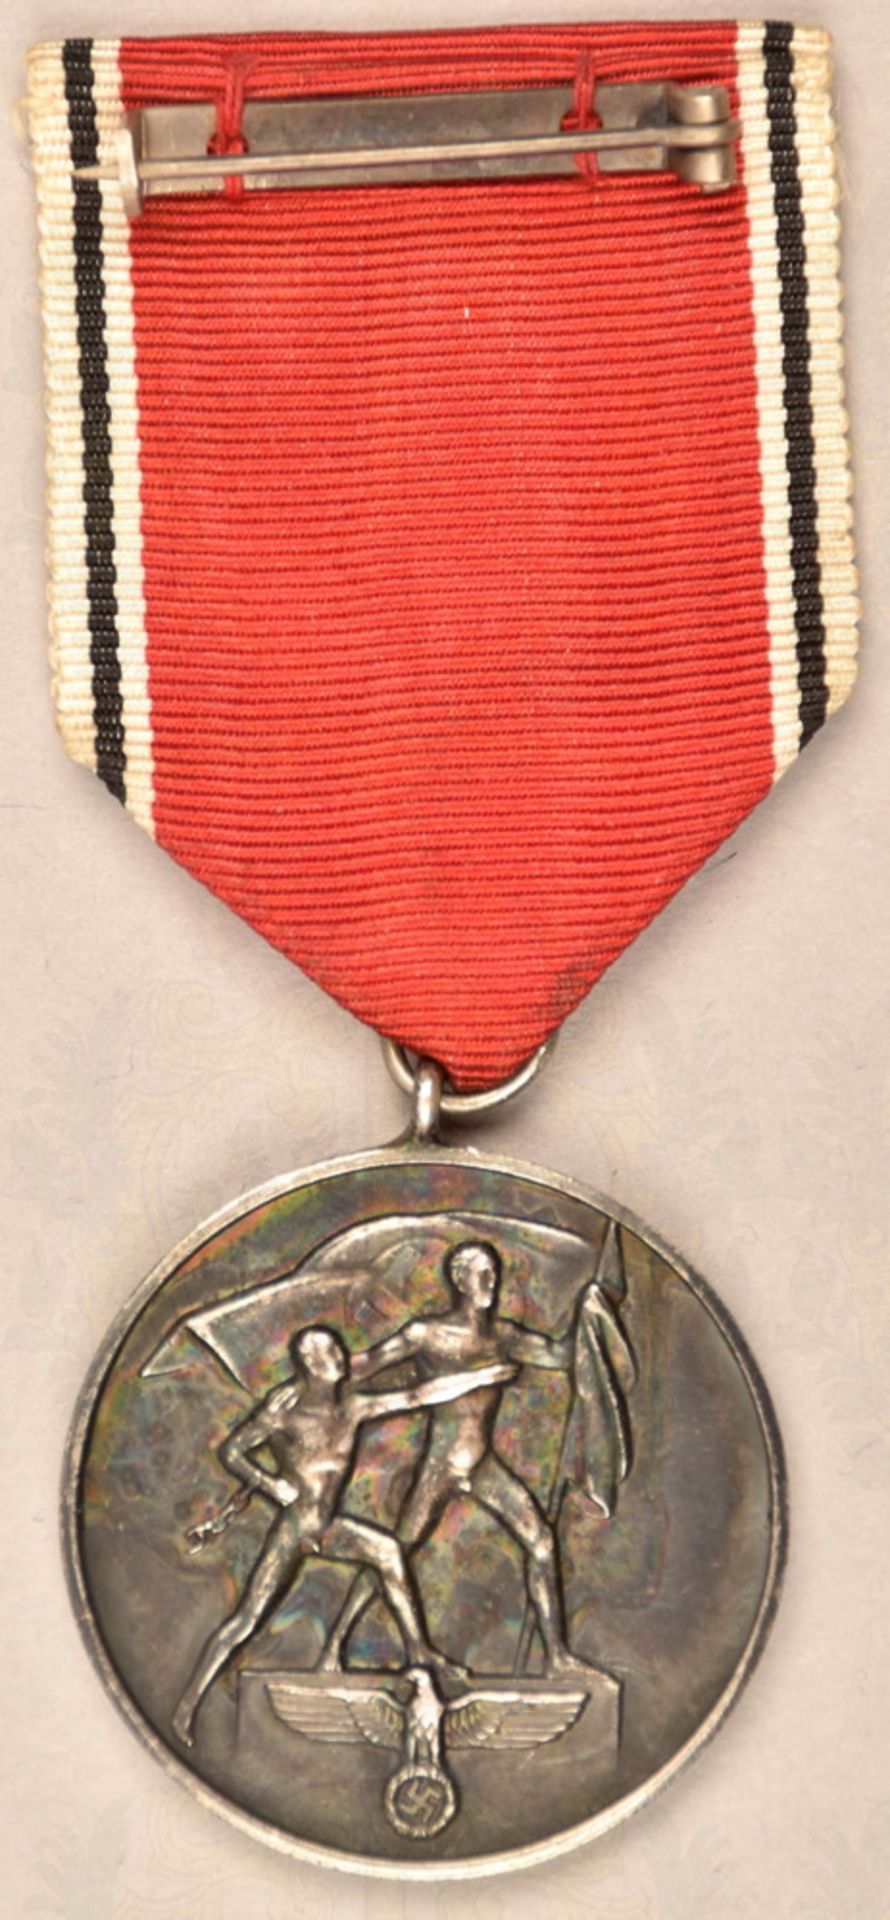 Medaille 13. März 1938 mit Verleihungsurkunde - Image 3 of 3